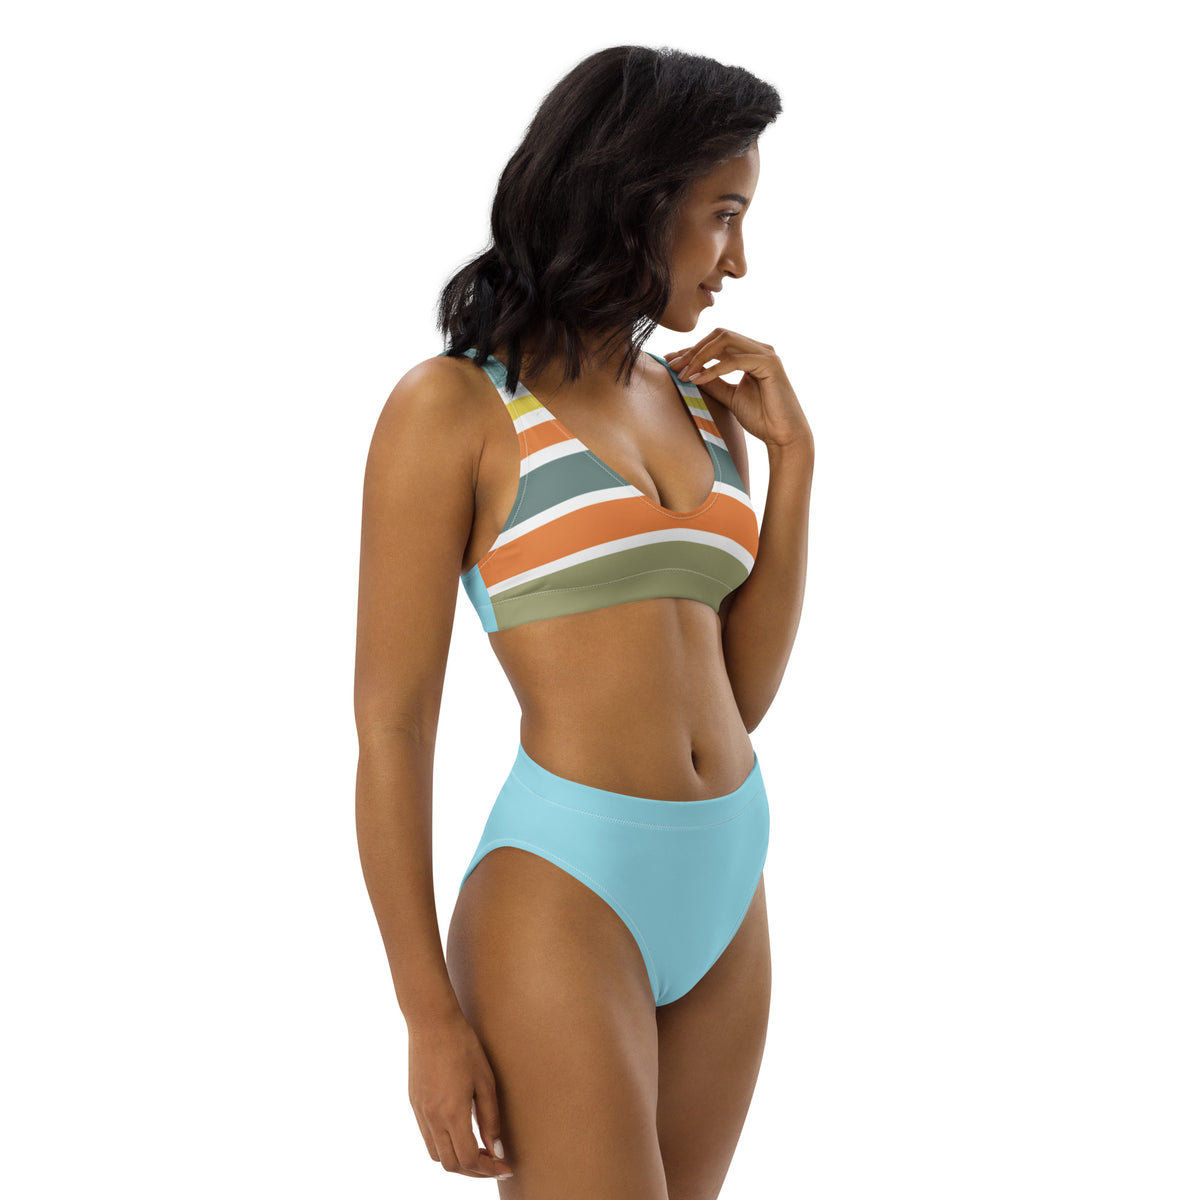 Eco Vintage Retro IV Color Recycled High-Waisted Bikini - New Design!!! - Area F Island Clothing